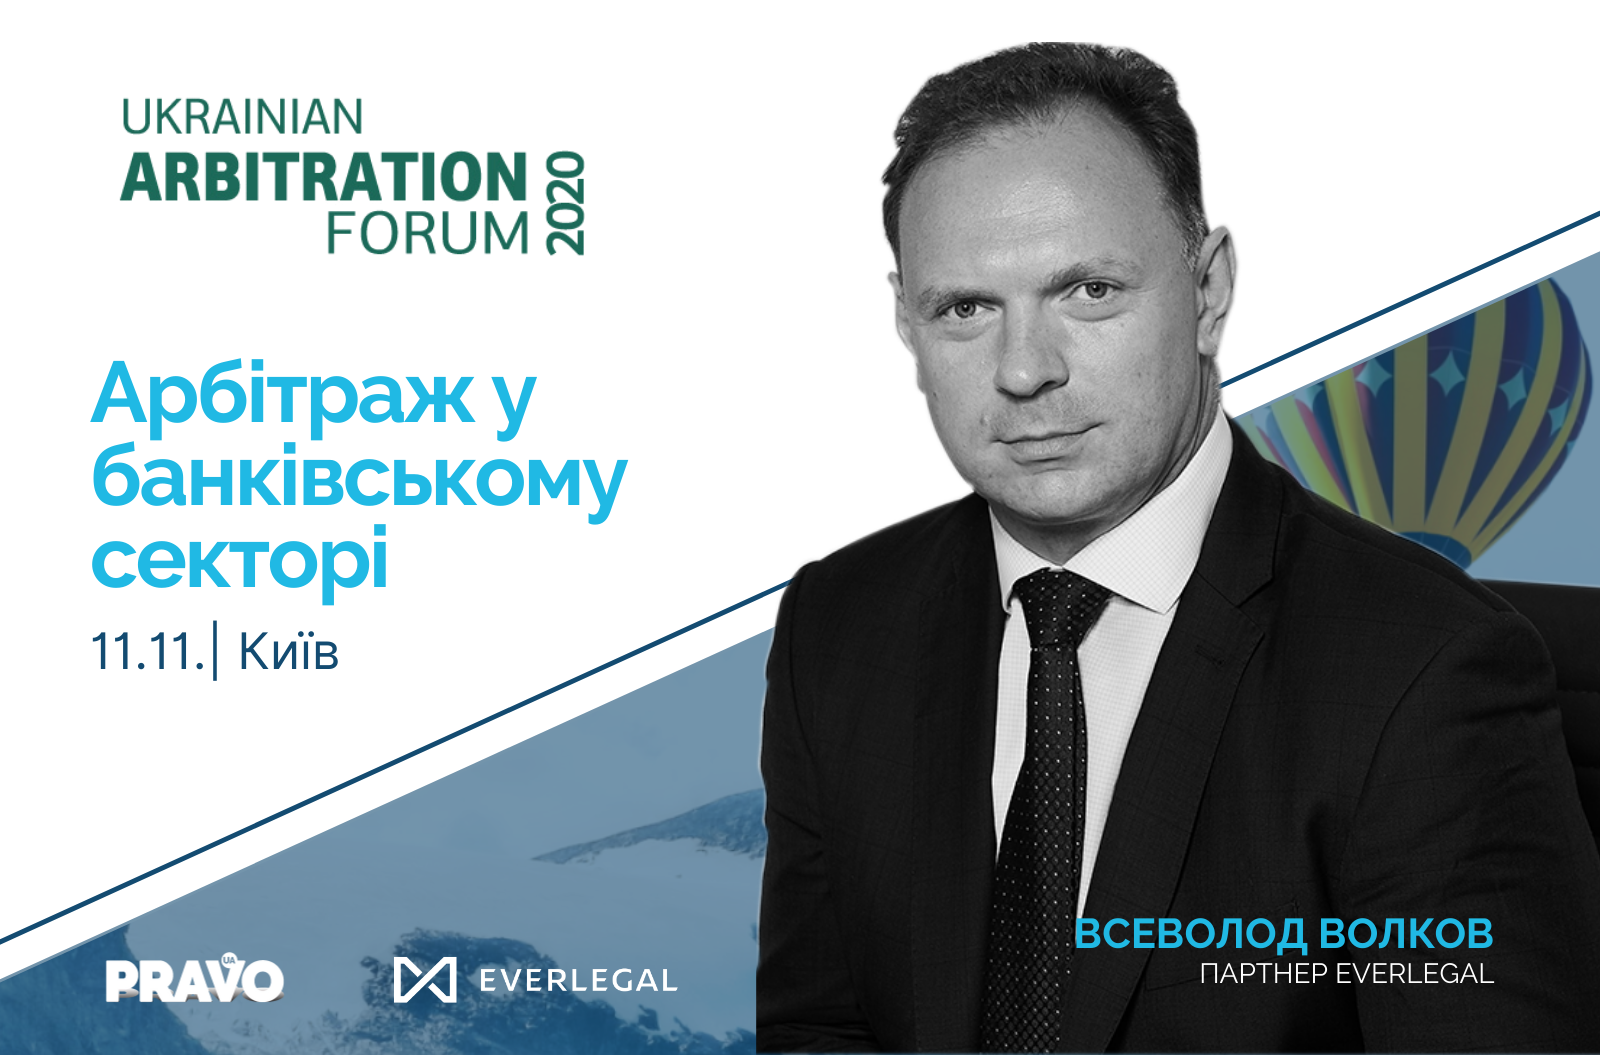 EVERLEGAL is inviting for Ukrainian Arbitration Forum 2020